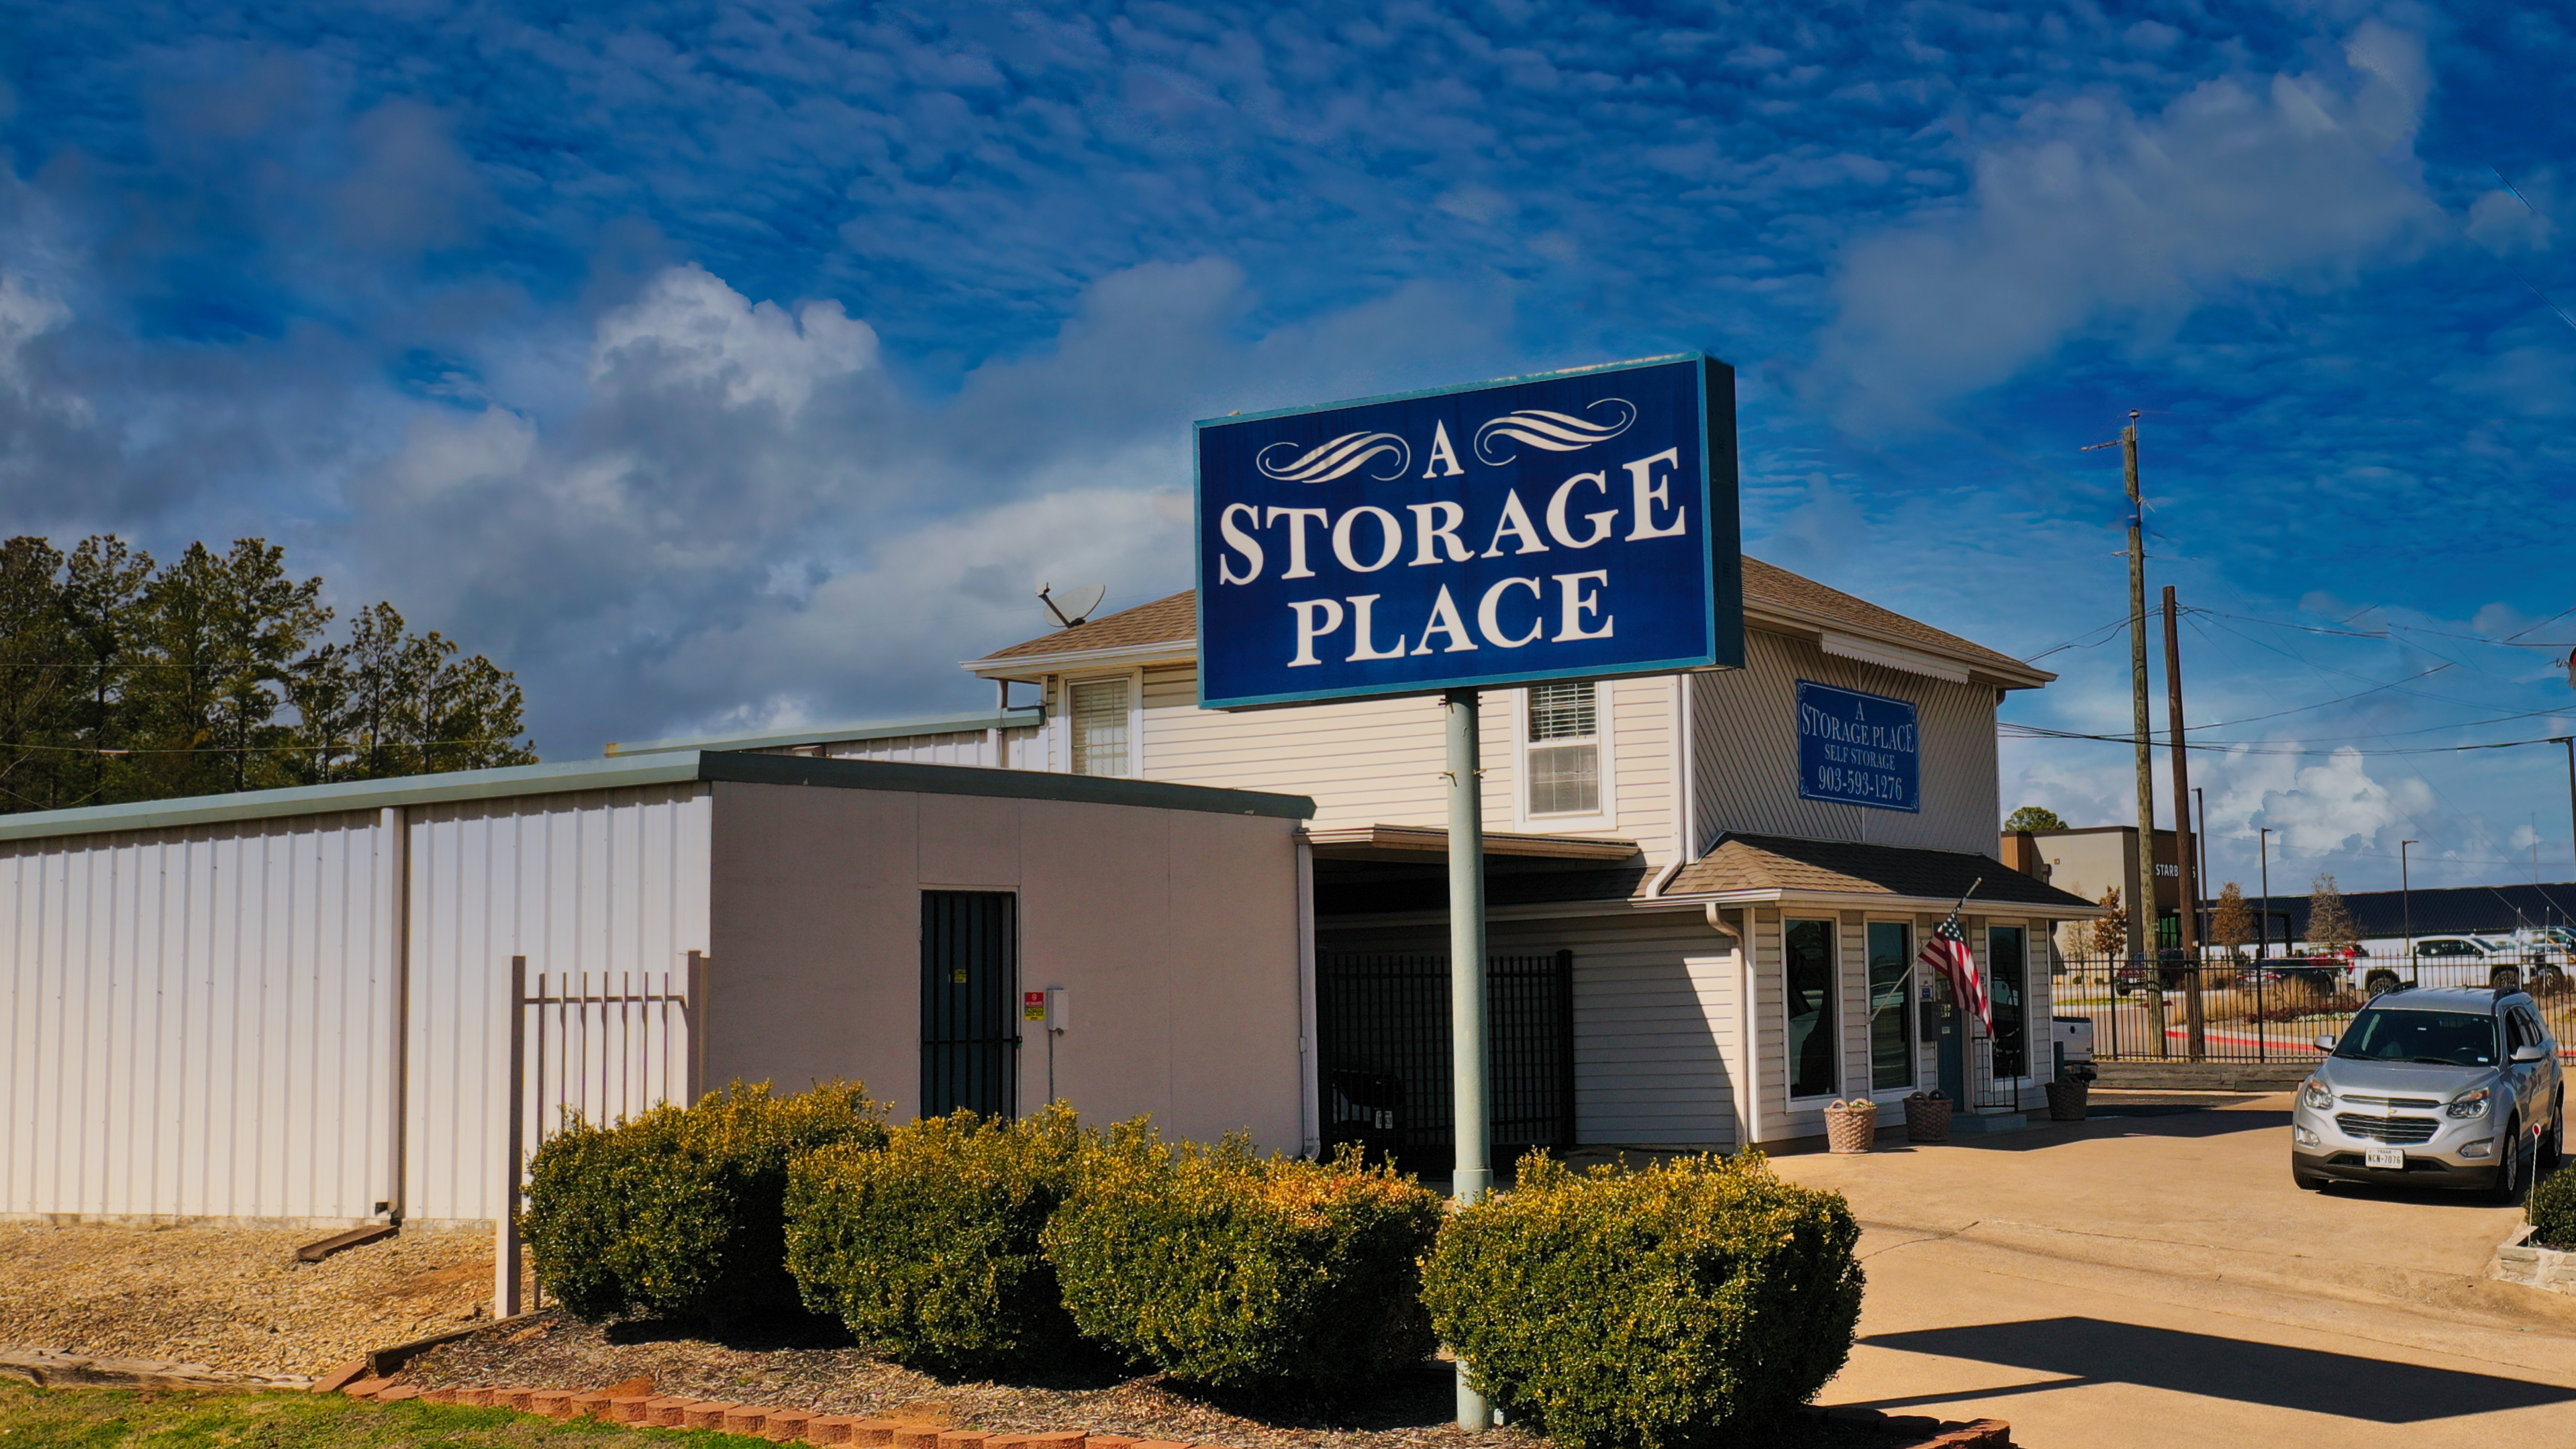 A Storage Place Street